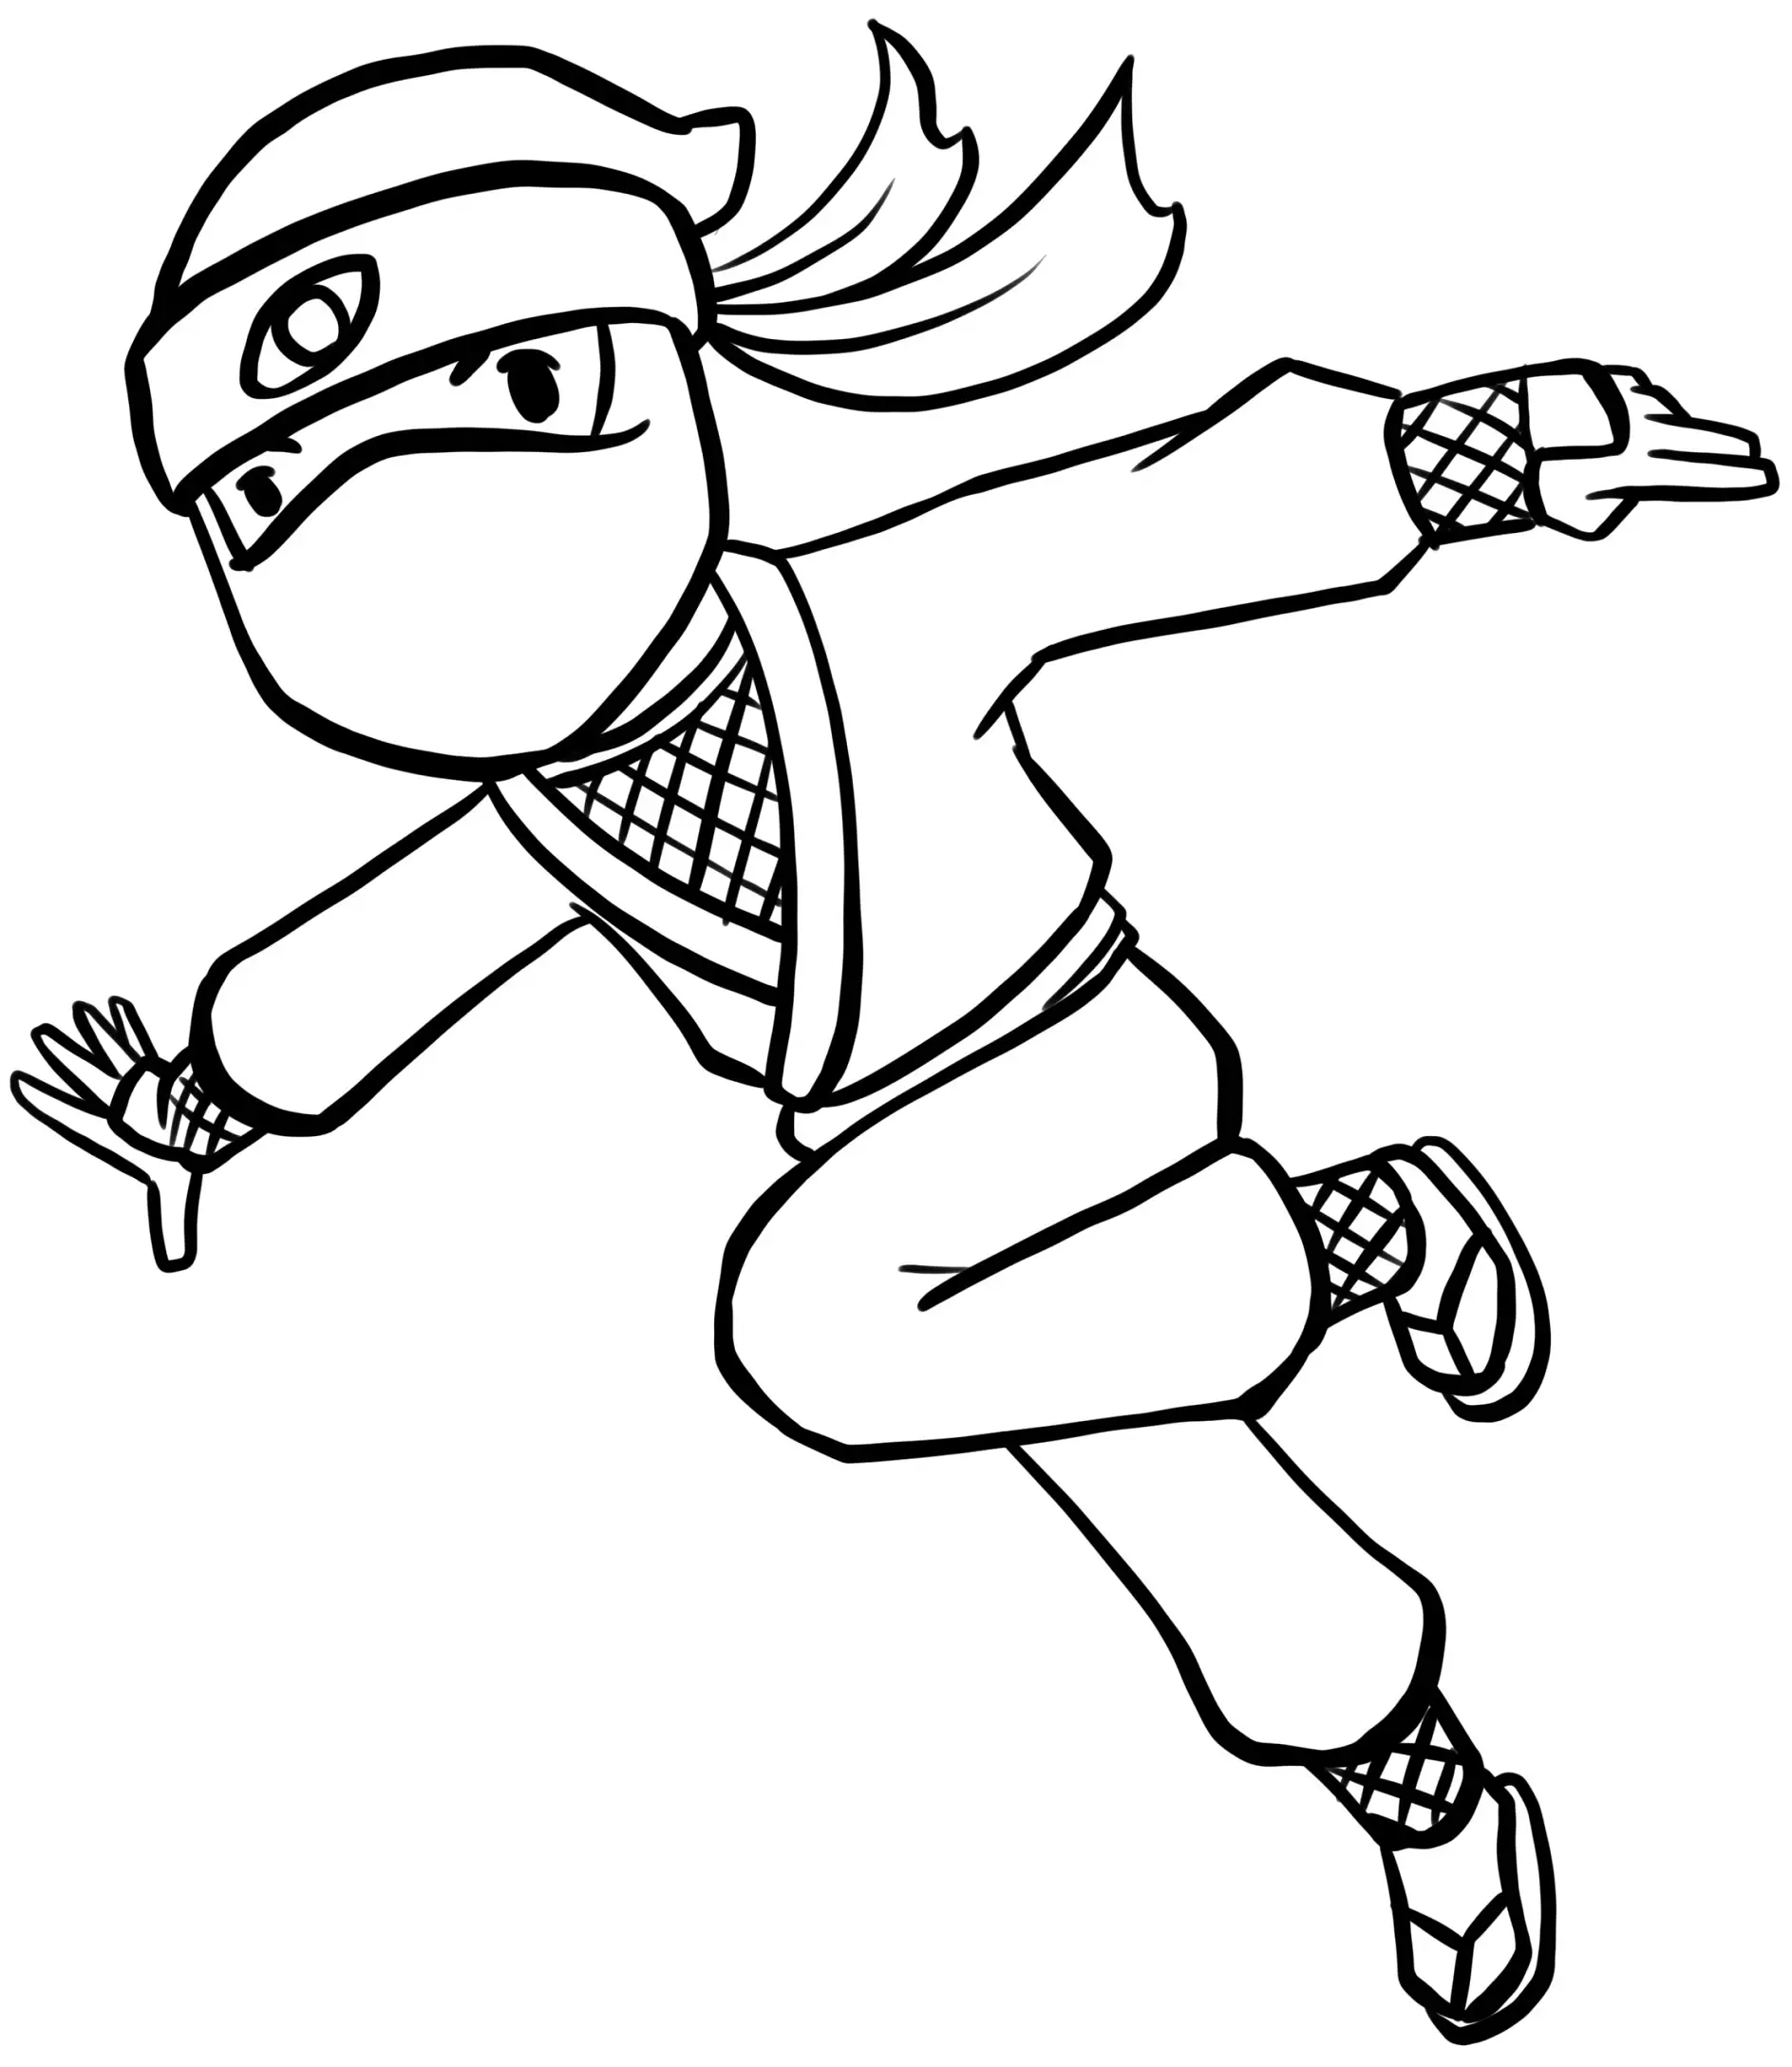 Ausmalbild Ninja in Sprungpose mit Bandana